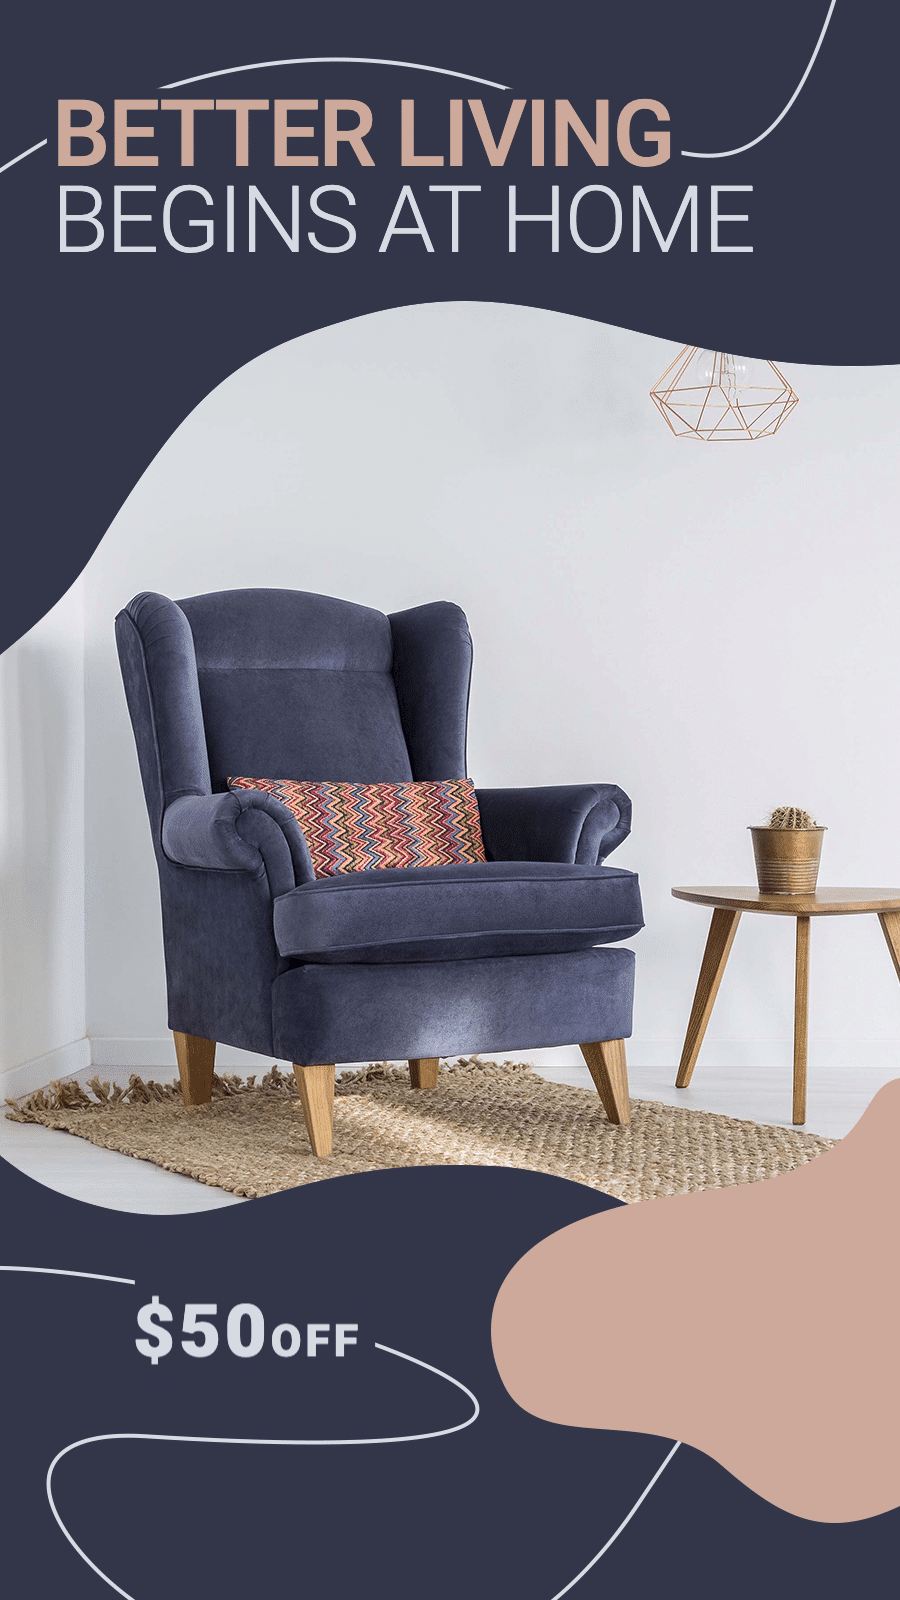 Indigo Blue Linear Geometry Design Armchair Home Furniture Sale Promotion Ecommerce Story预览效果